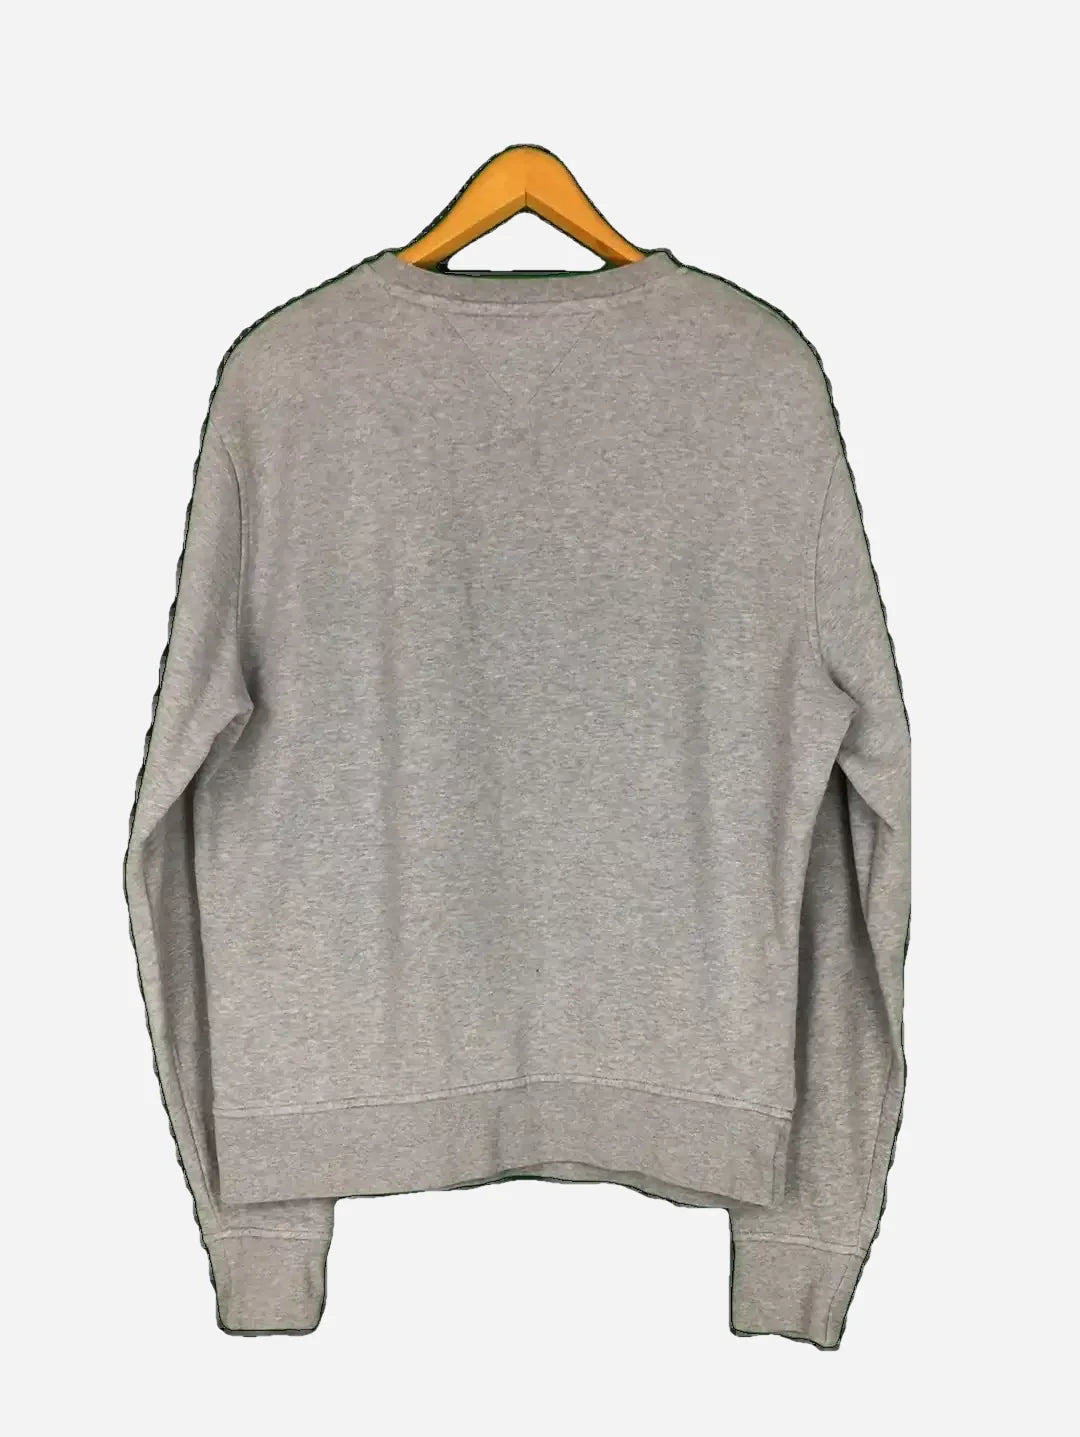 Tommy Hilfiger Sweater (L)